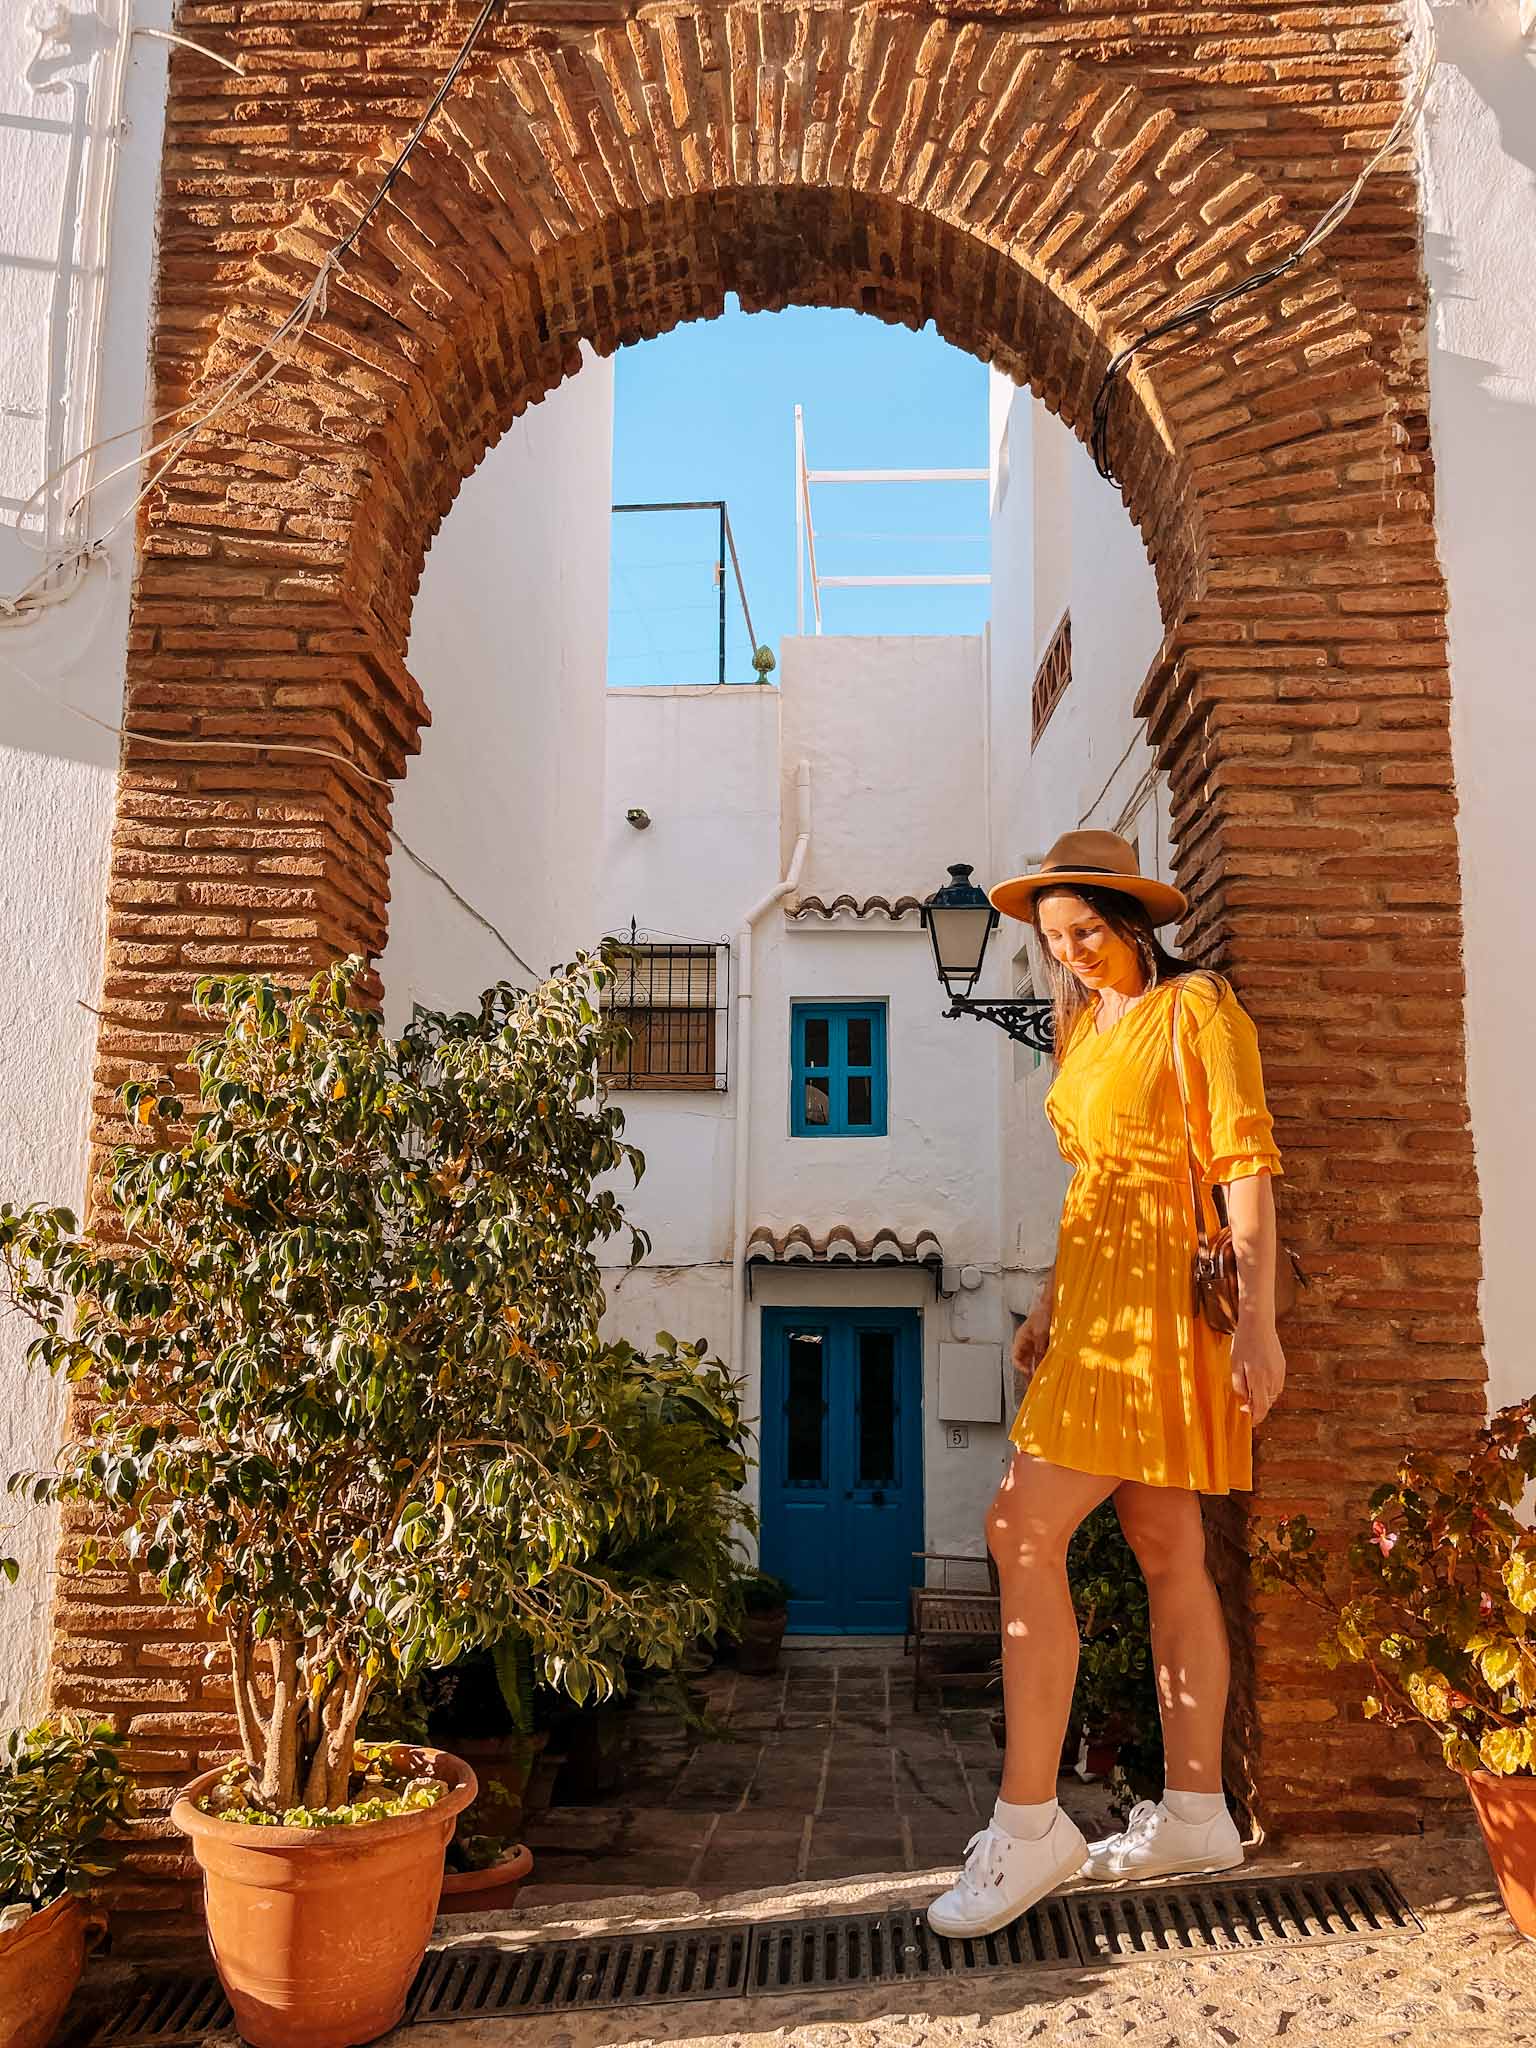 Best Instagram spots of the most beautiful places in Frigiliana village, Spain